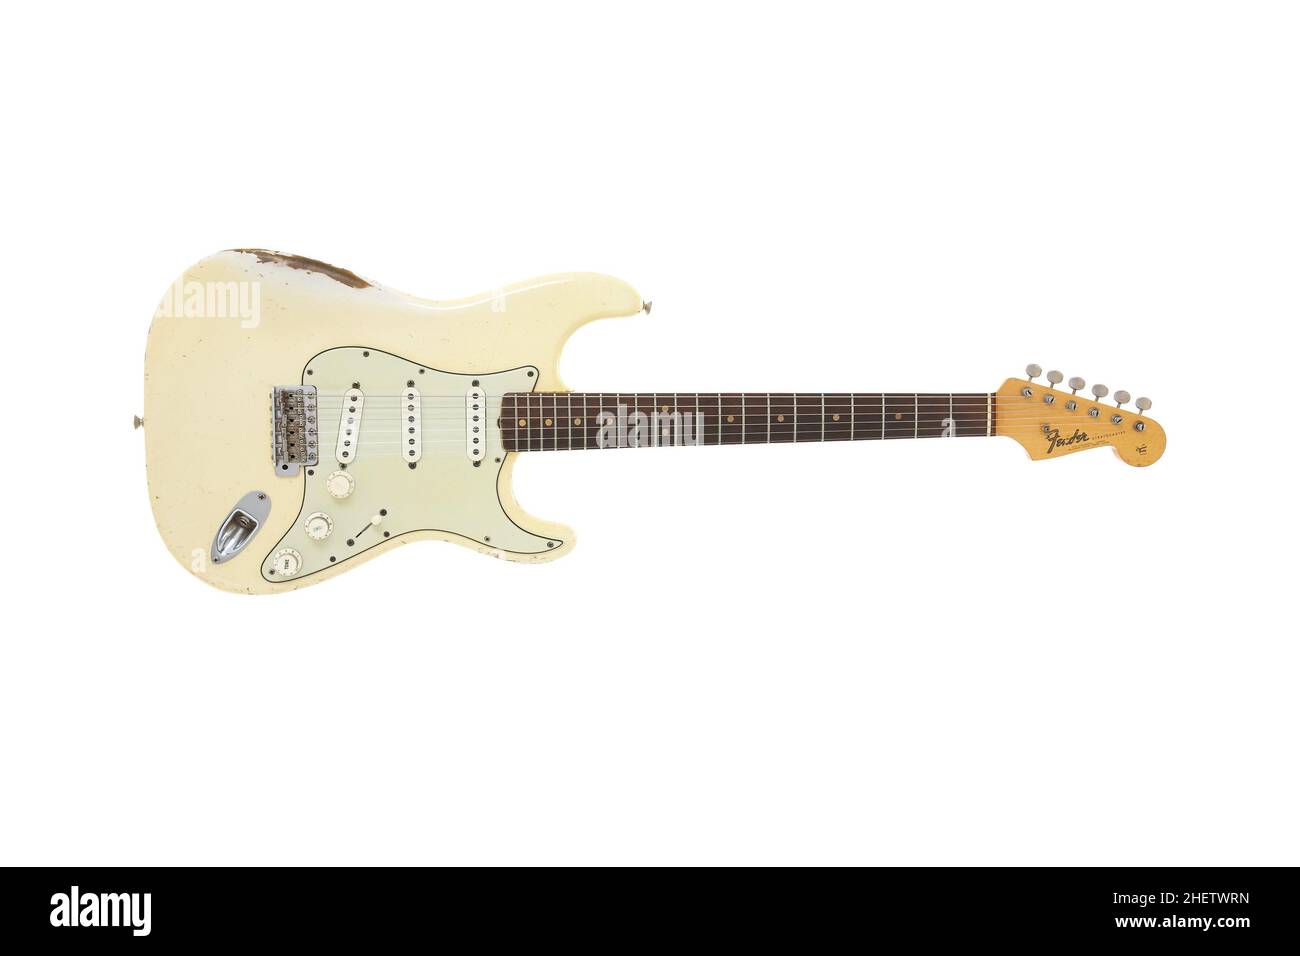 1964 Guitare Stratoaster Fender, blanc crème Photo Stock - Alamy